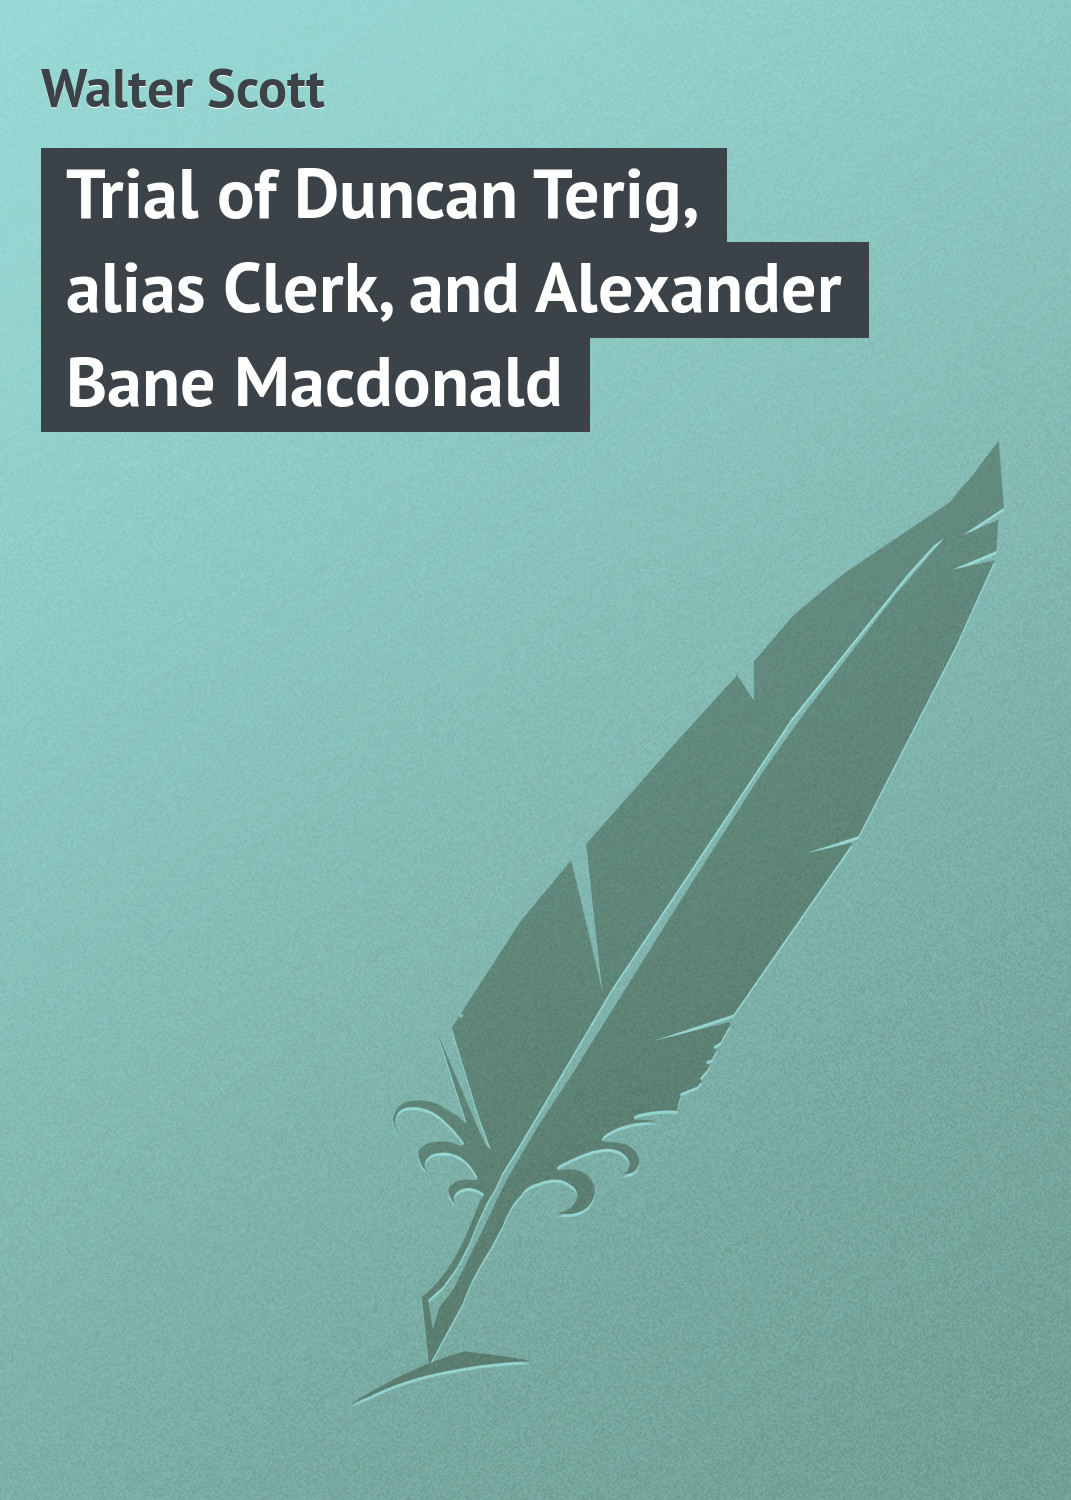 Trial of Duncan Terig, alias Clerk, and Alexander Bane Macdonald